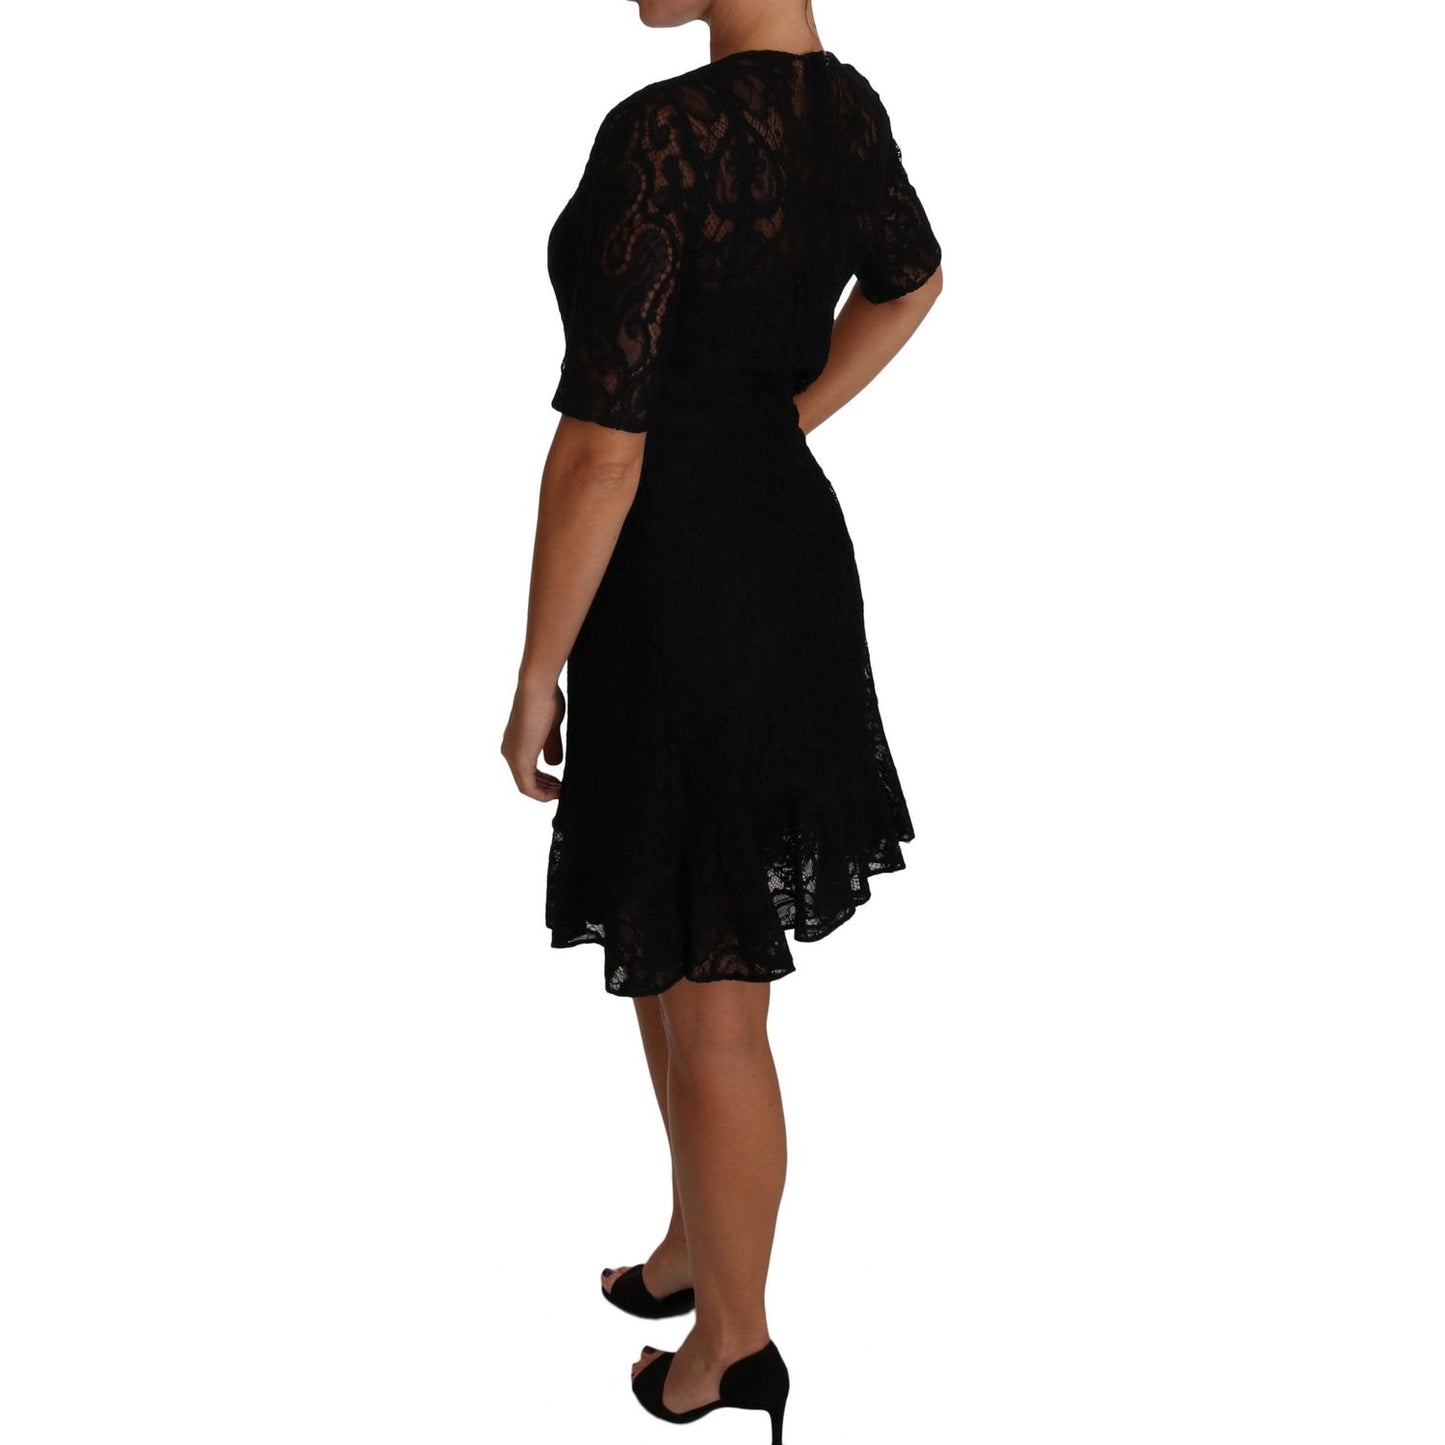 Dolce & Gabbana Chic Black Lace Sheath Dress with Silk Lining chic-black-lace-sheath-dress-with-silk-lining